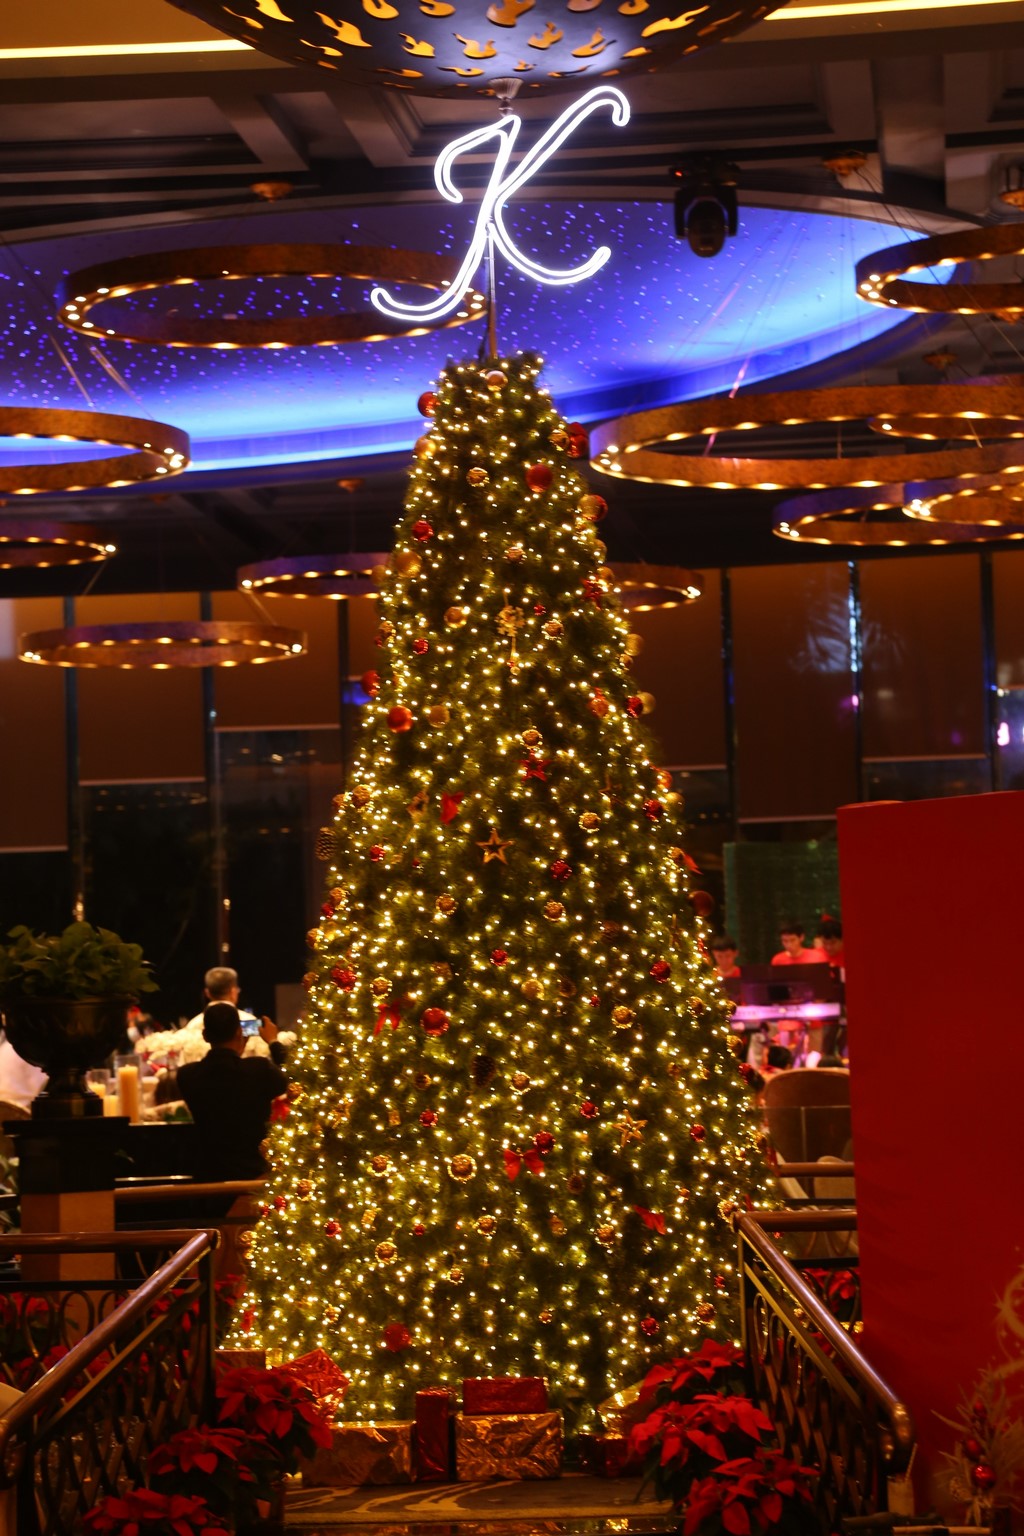 Featured image for “Christmas Tree Lighting Ceremony @ Kempinski Hotel Shenzhen”